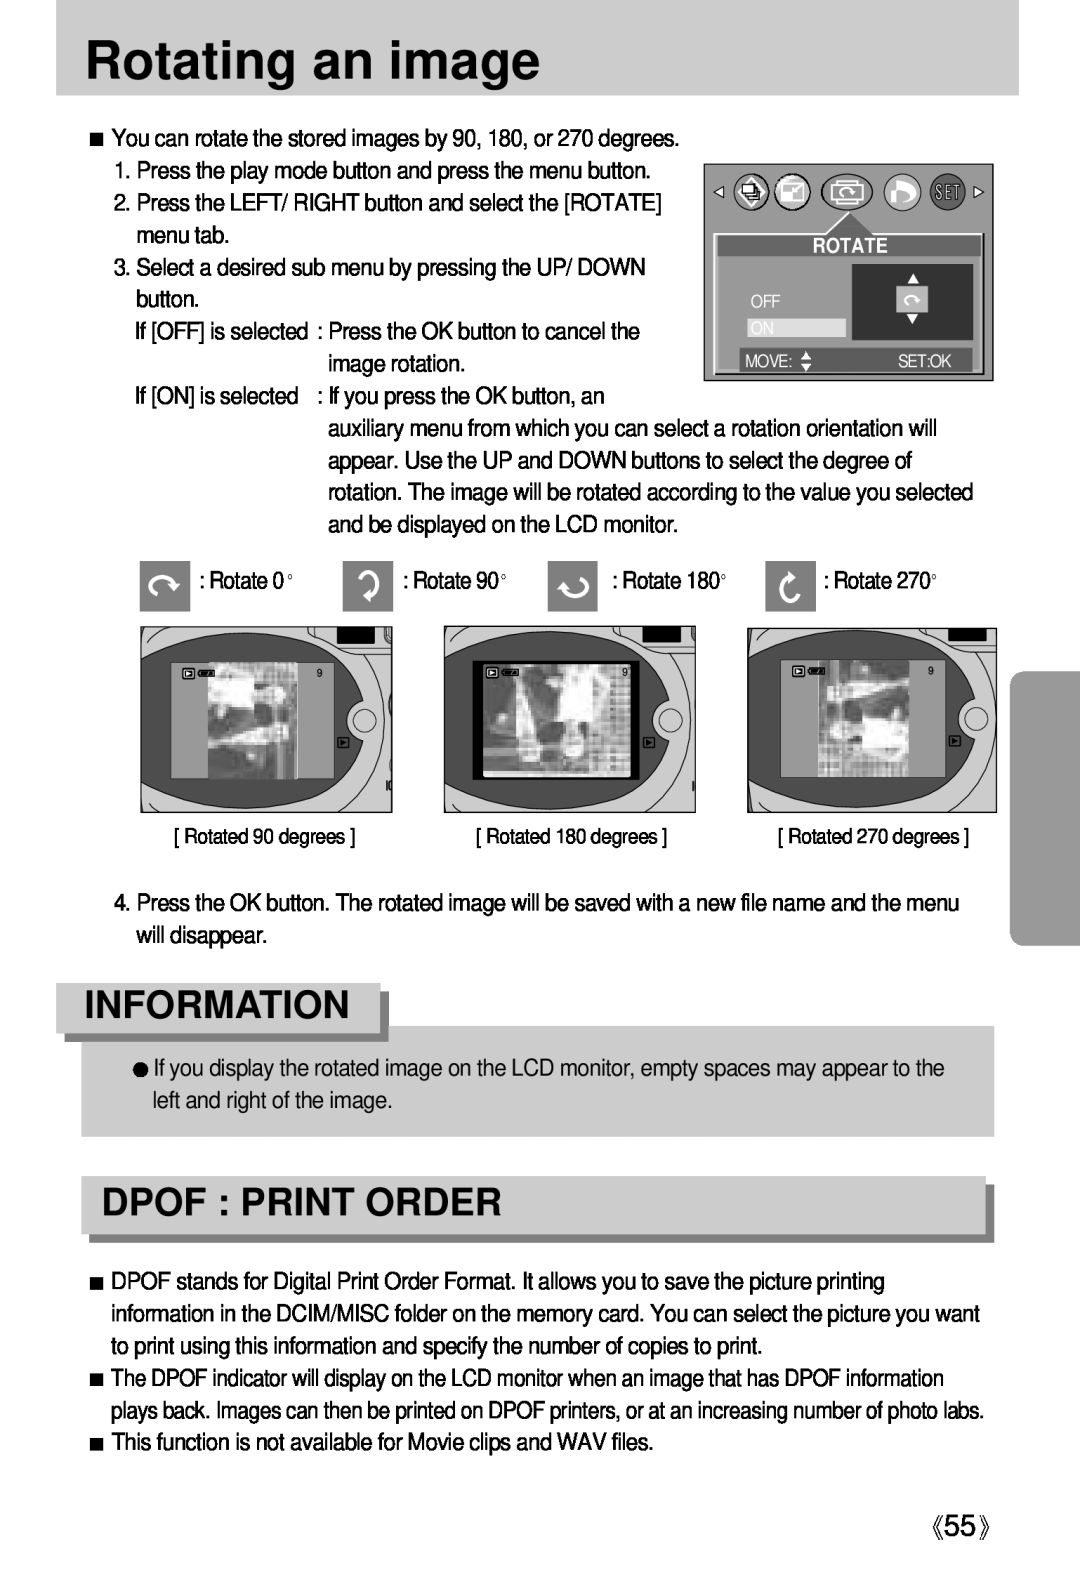 Samsung Digimax U-CA user manual Rotating an image, Dpof Print Order, Information, menu tab, button, image rotation 